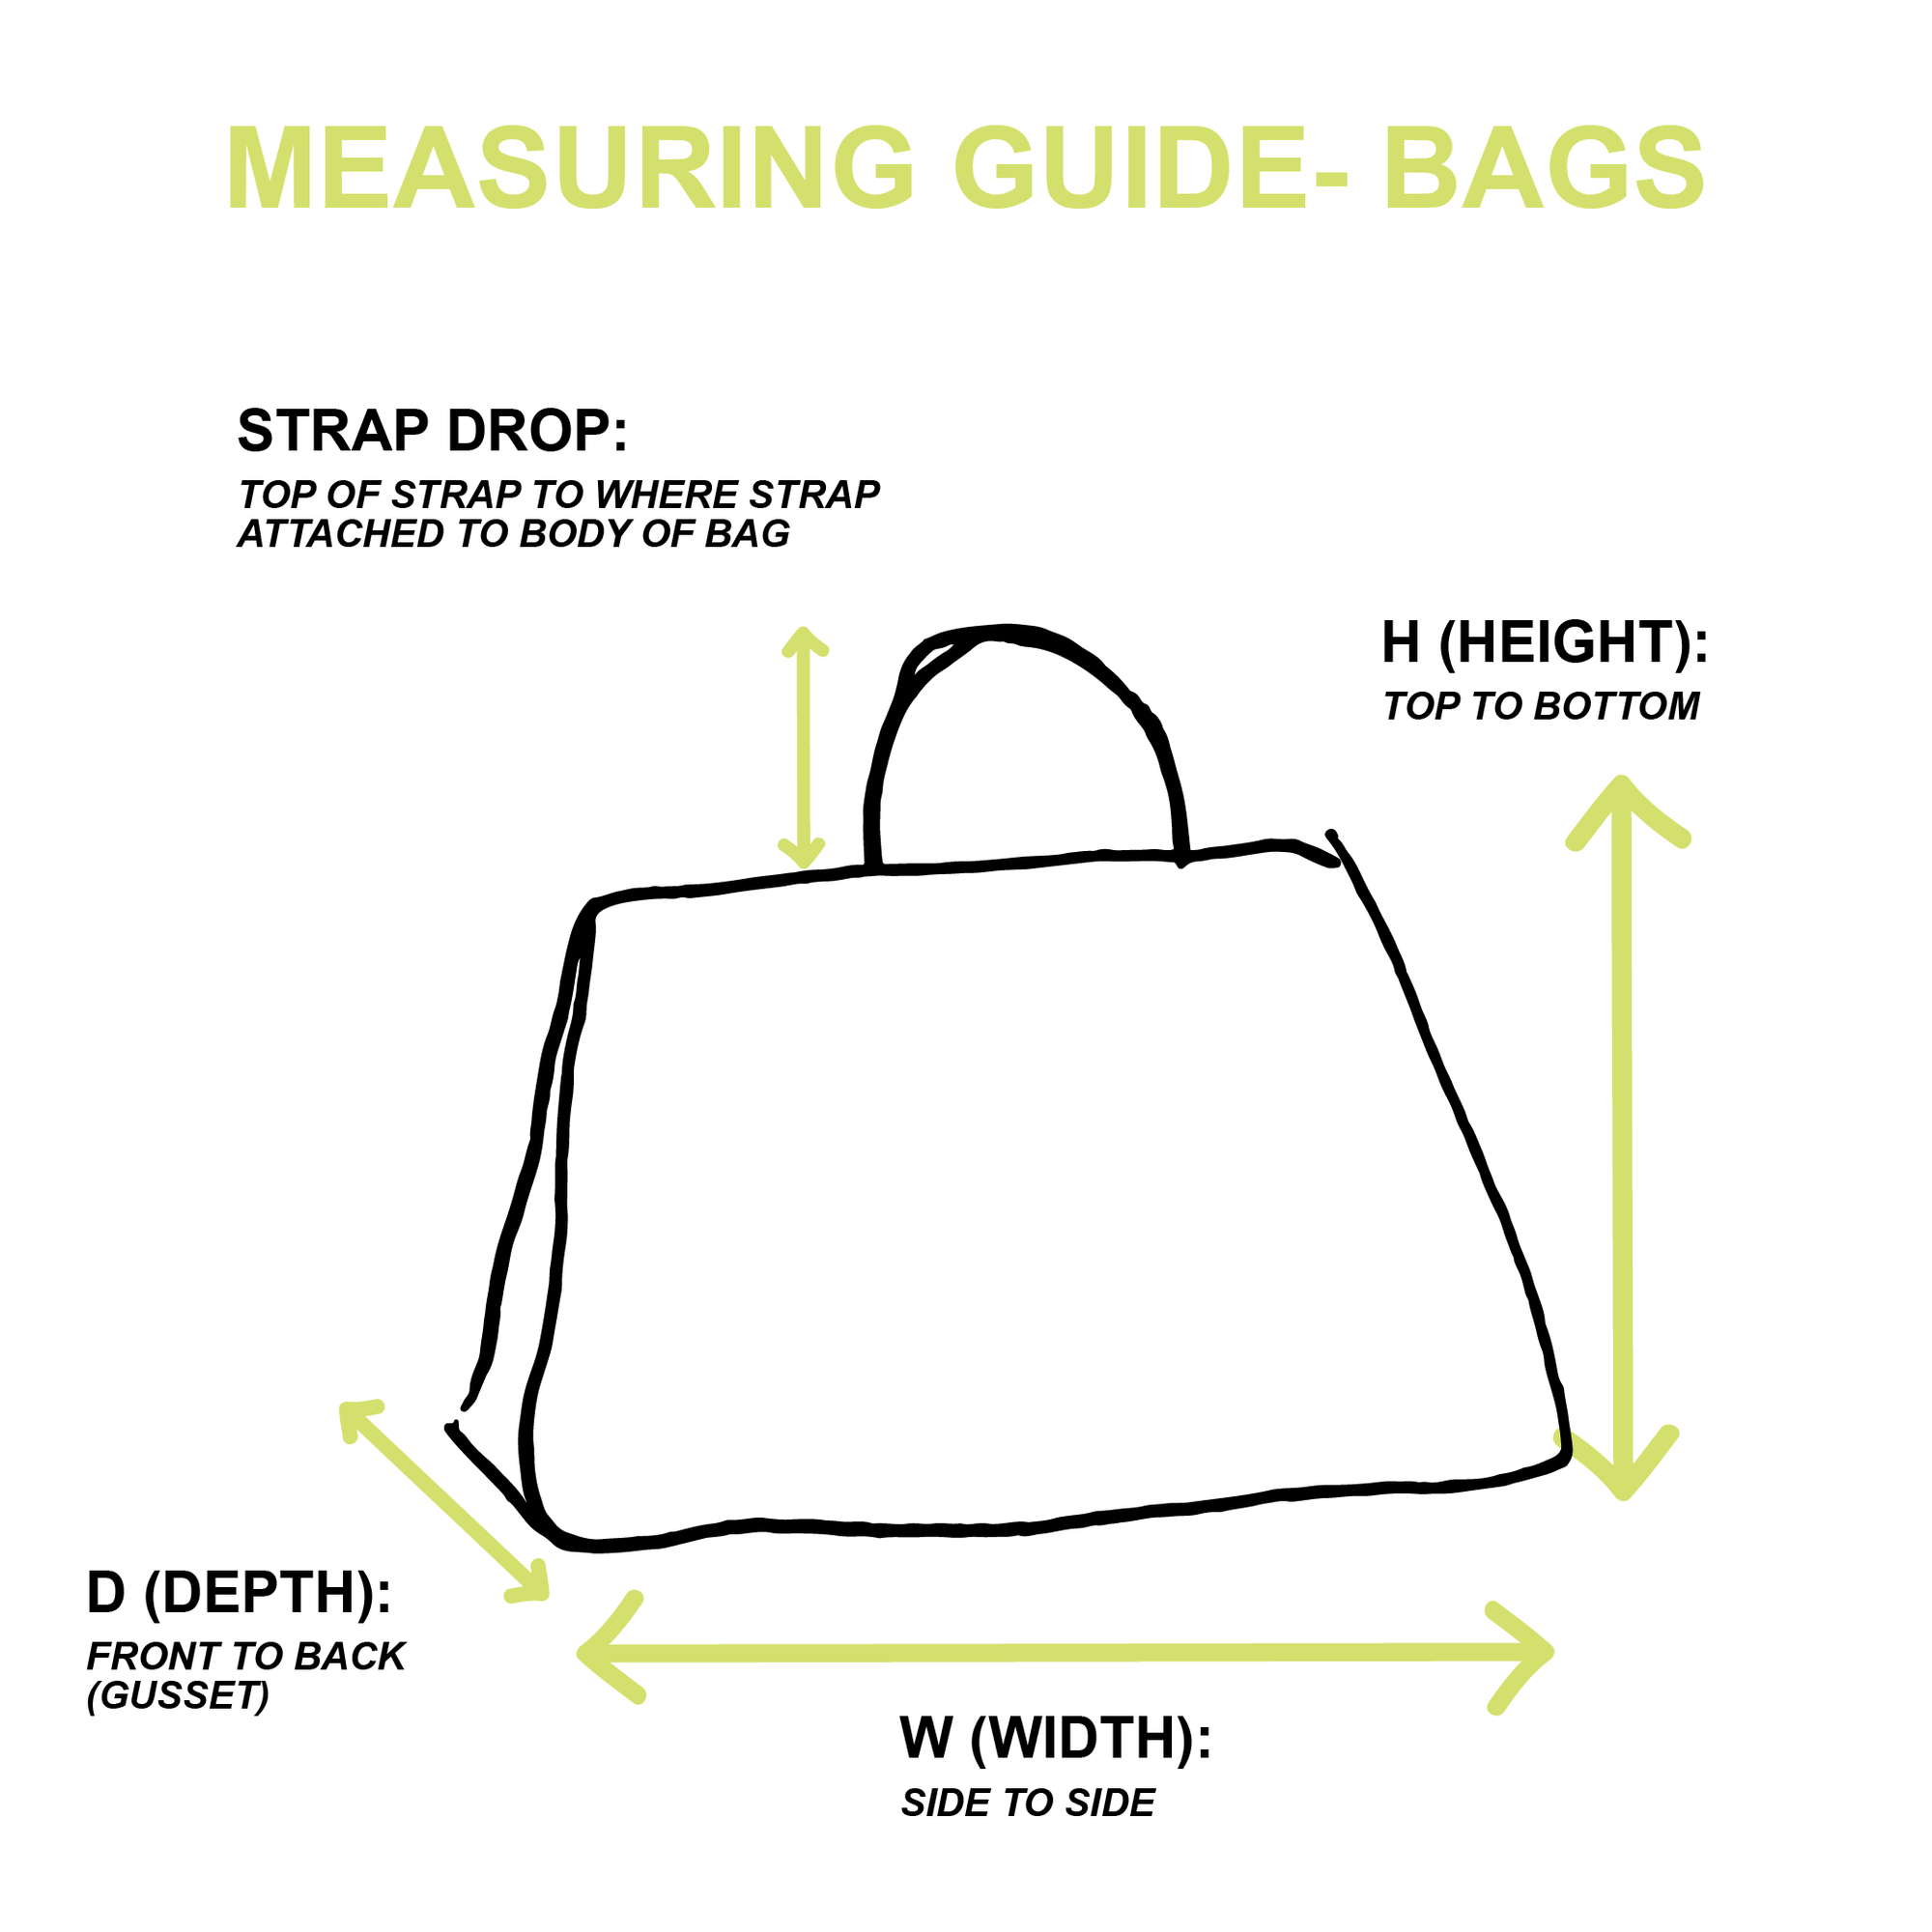 Gucci Beige Logo Mini Shoulder Bag